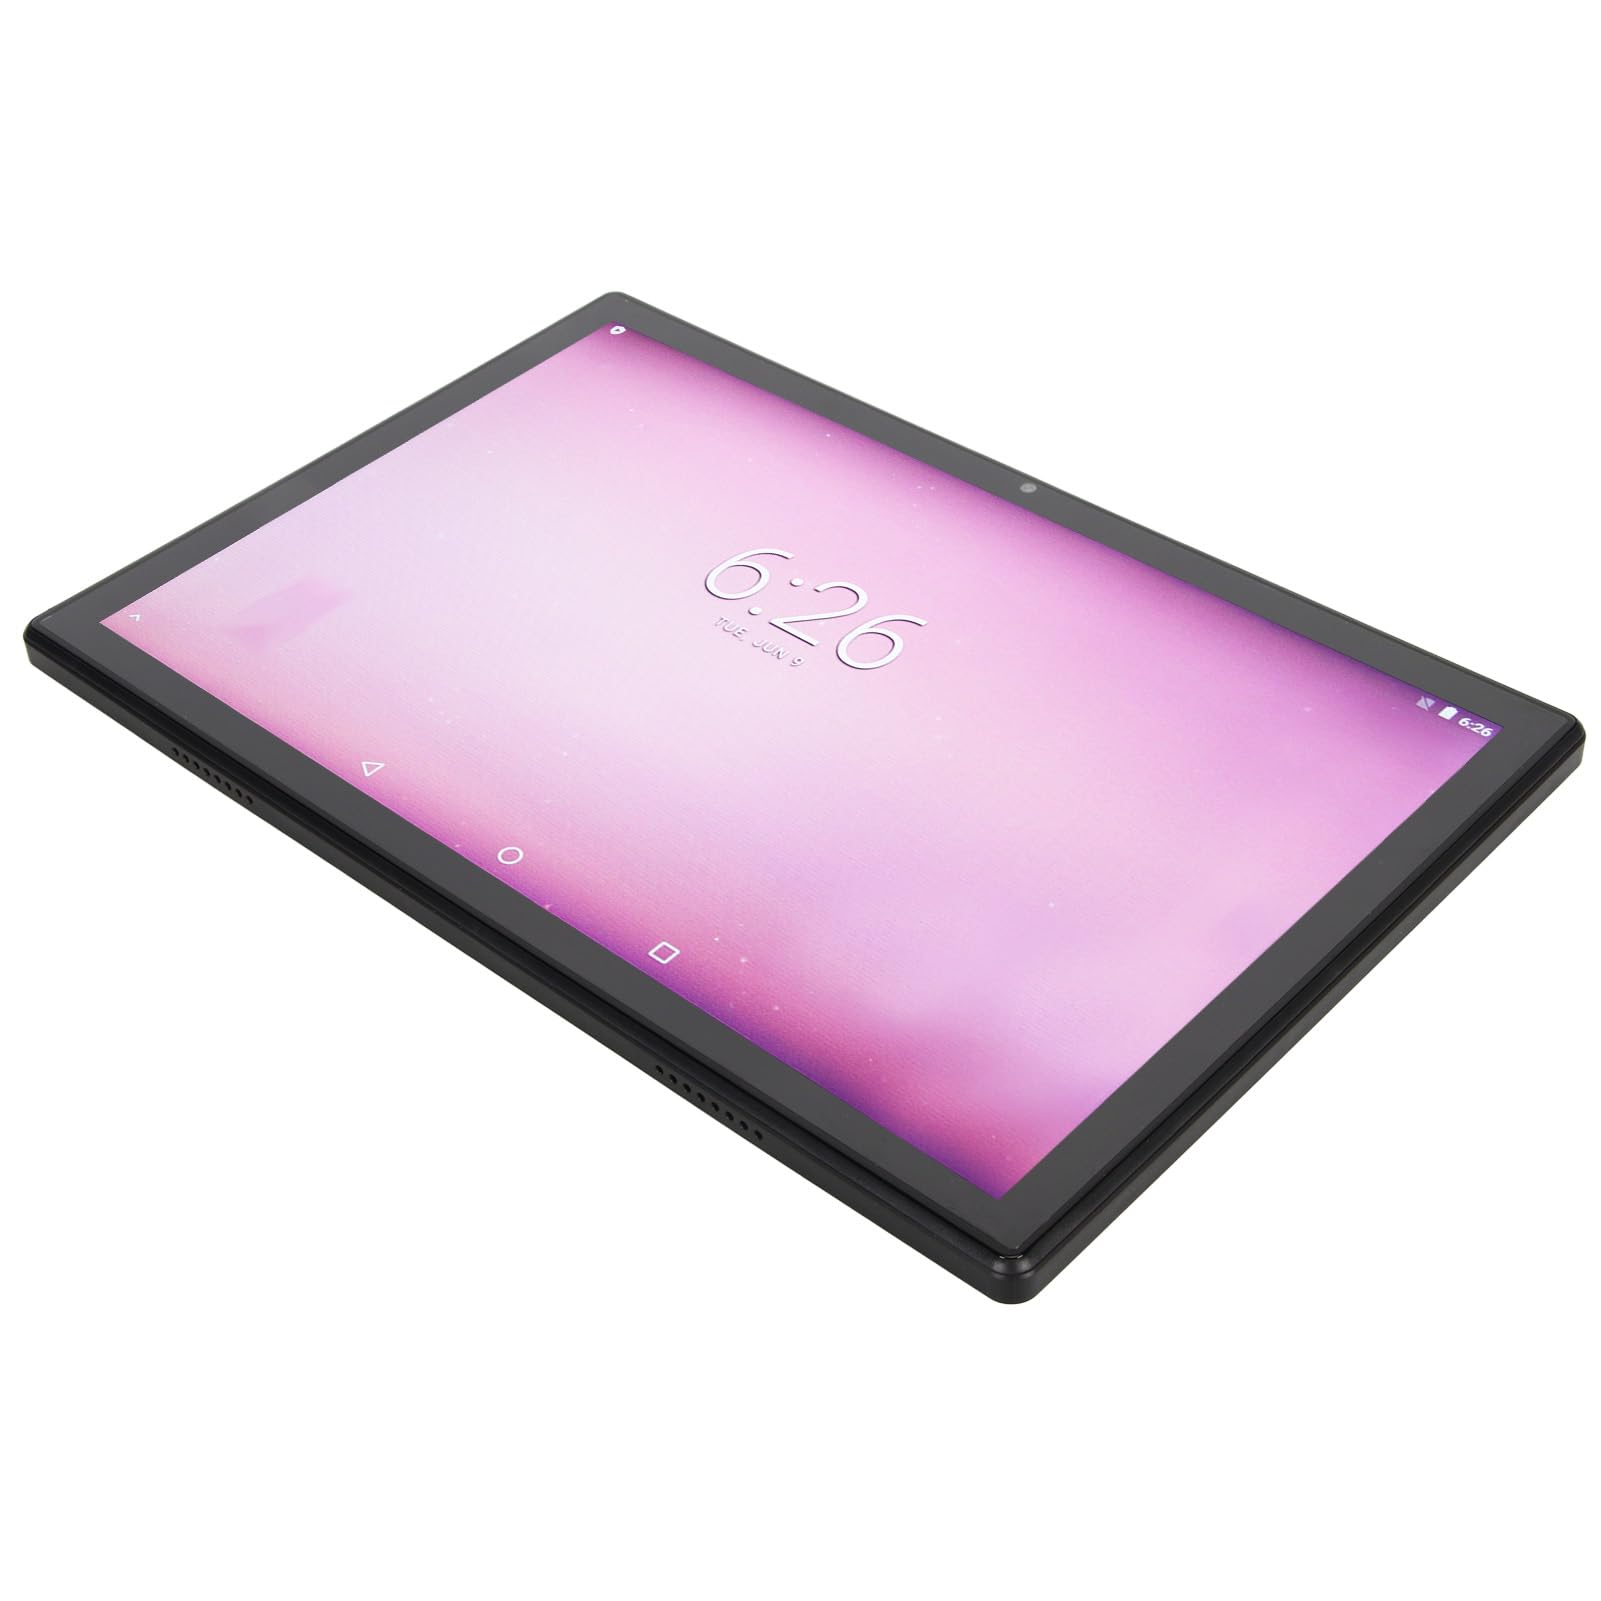 GLOGLOW Digital Tablet Black WiFi Tablet 1960x1080 Resolution 7000mAh 5G WiFi 8GB RAM 256GB ROM for Reading Entertainment (US Plug)